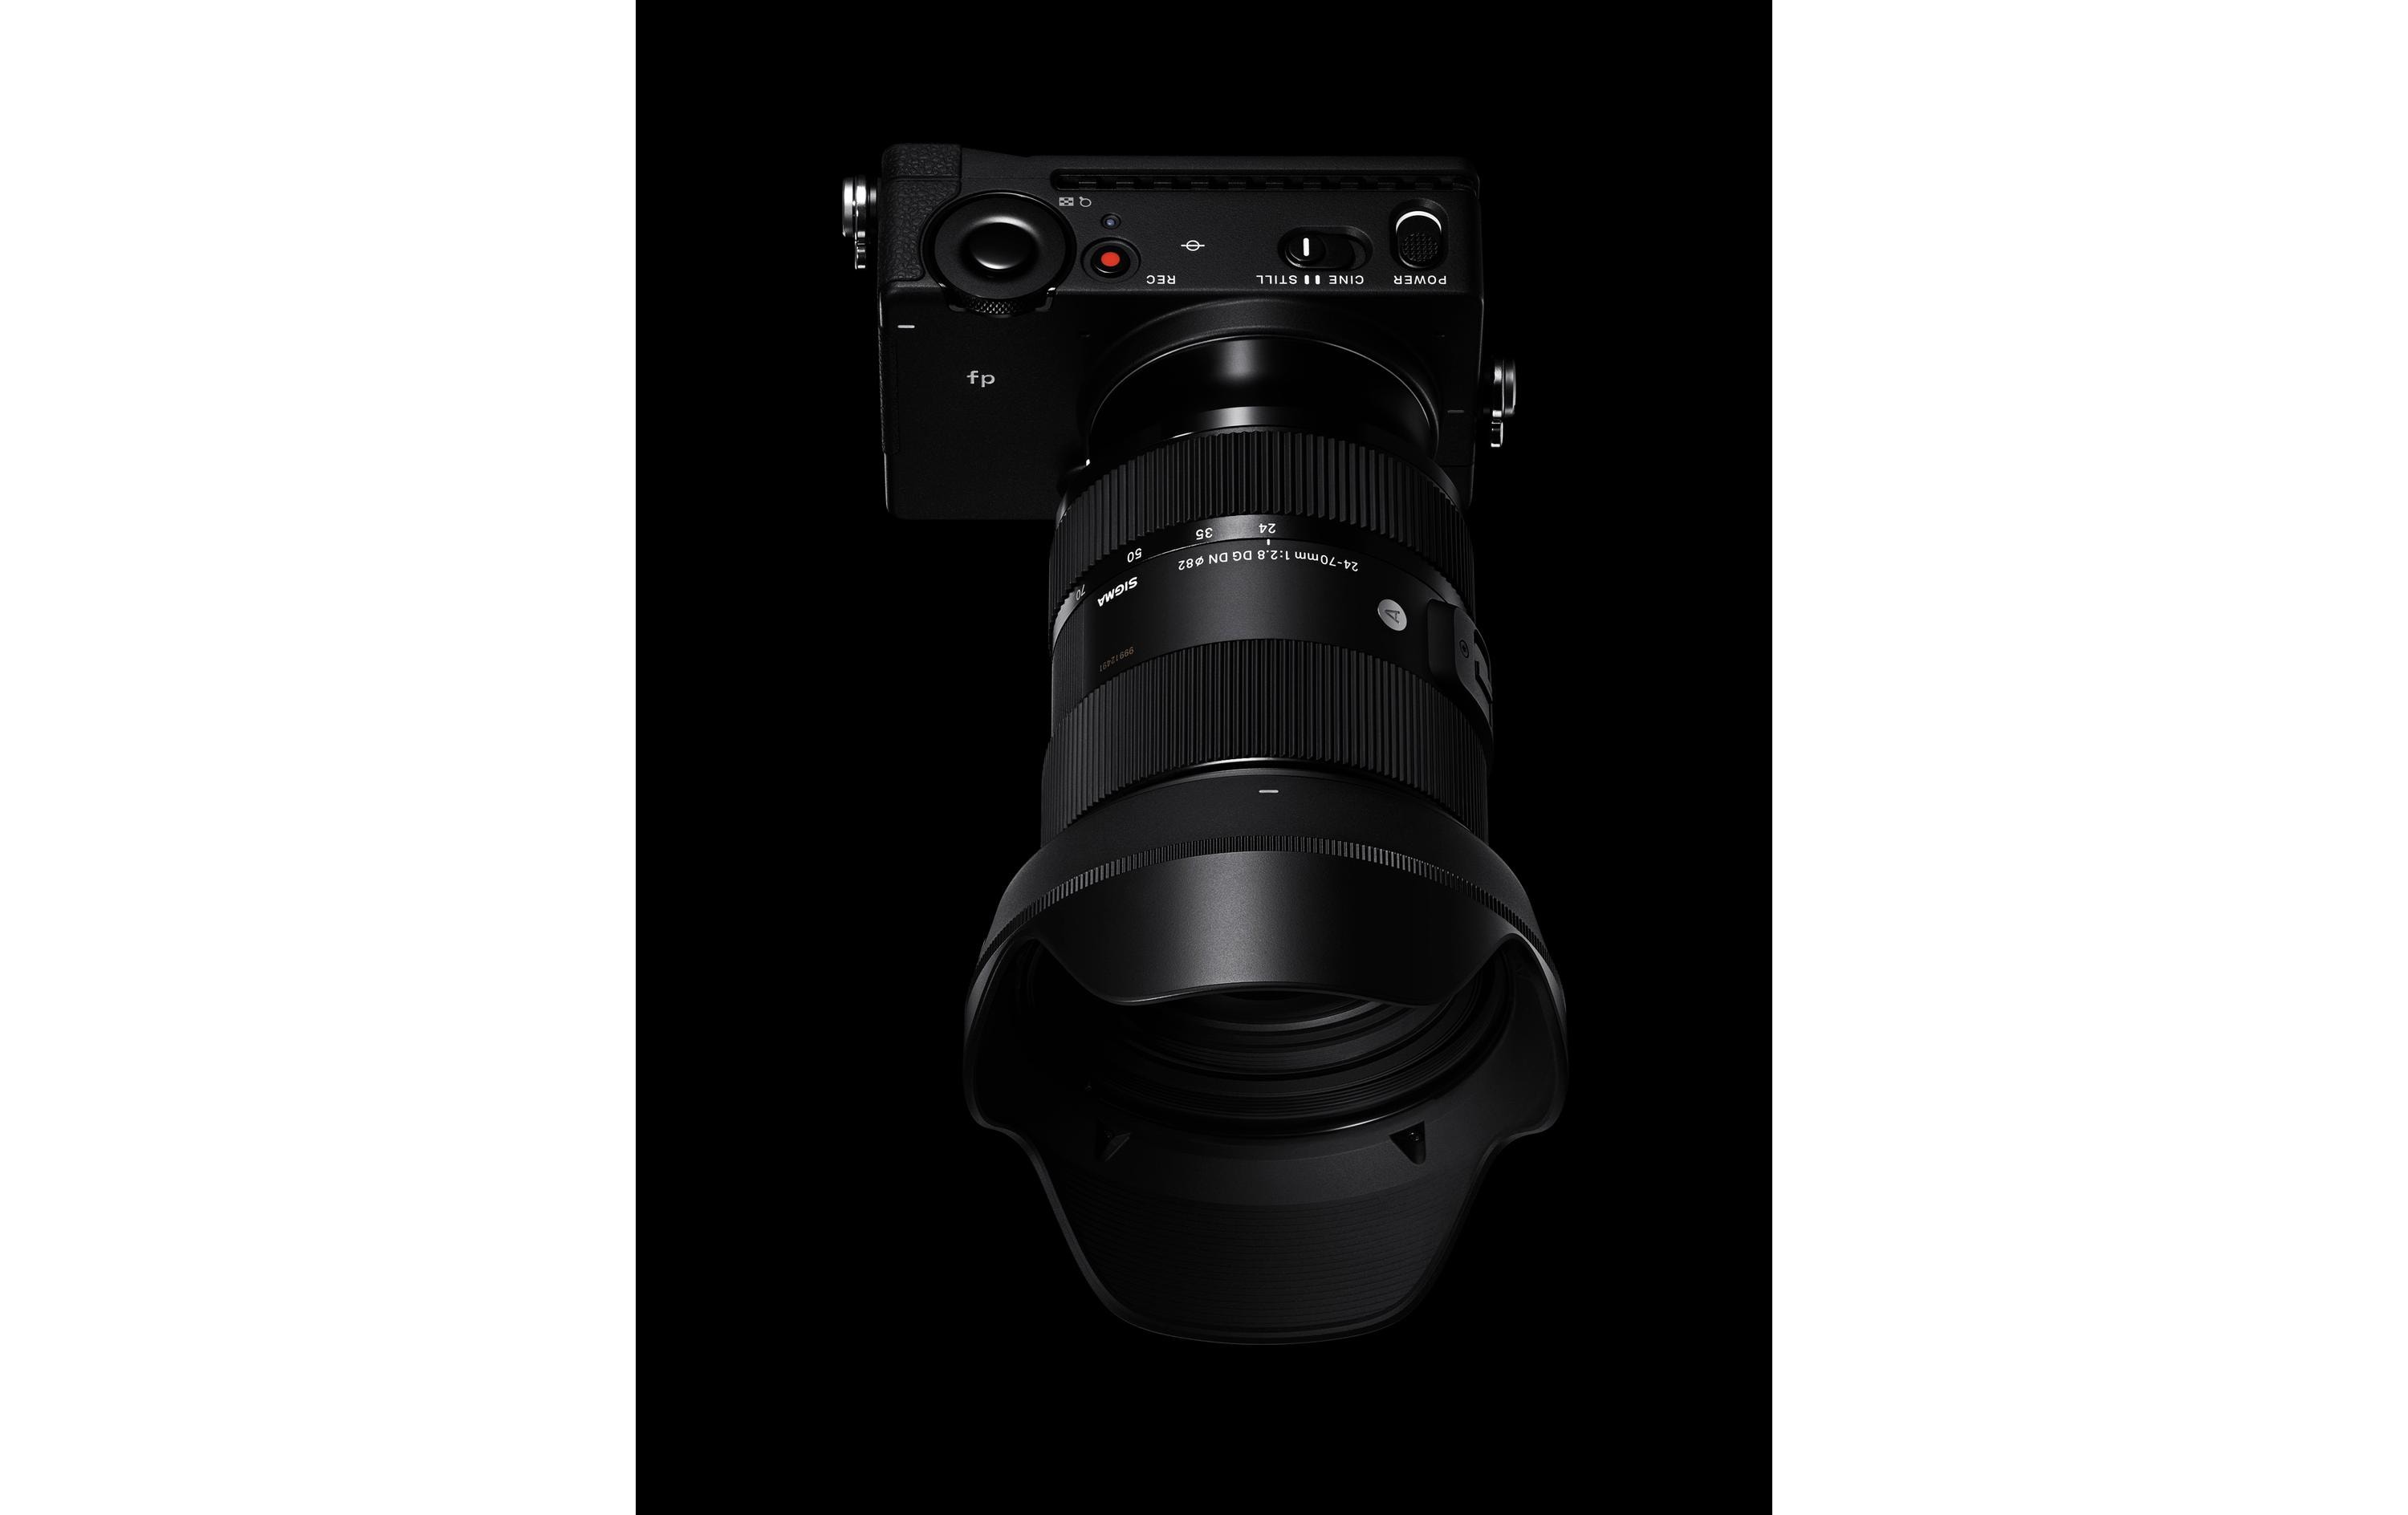 Sigma Zoomobjektiv 24-70mm F/2.8 DG DN Art Sony E-Mount